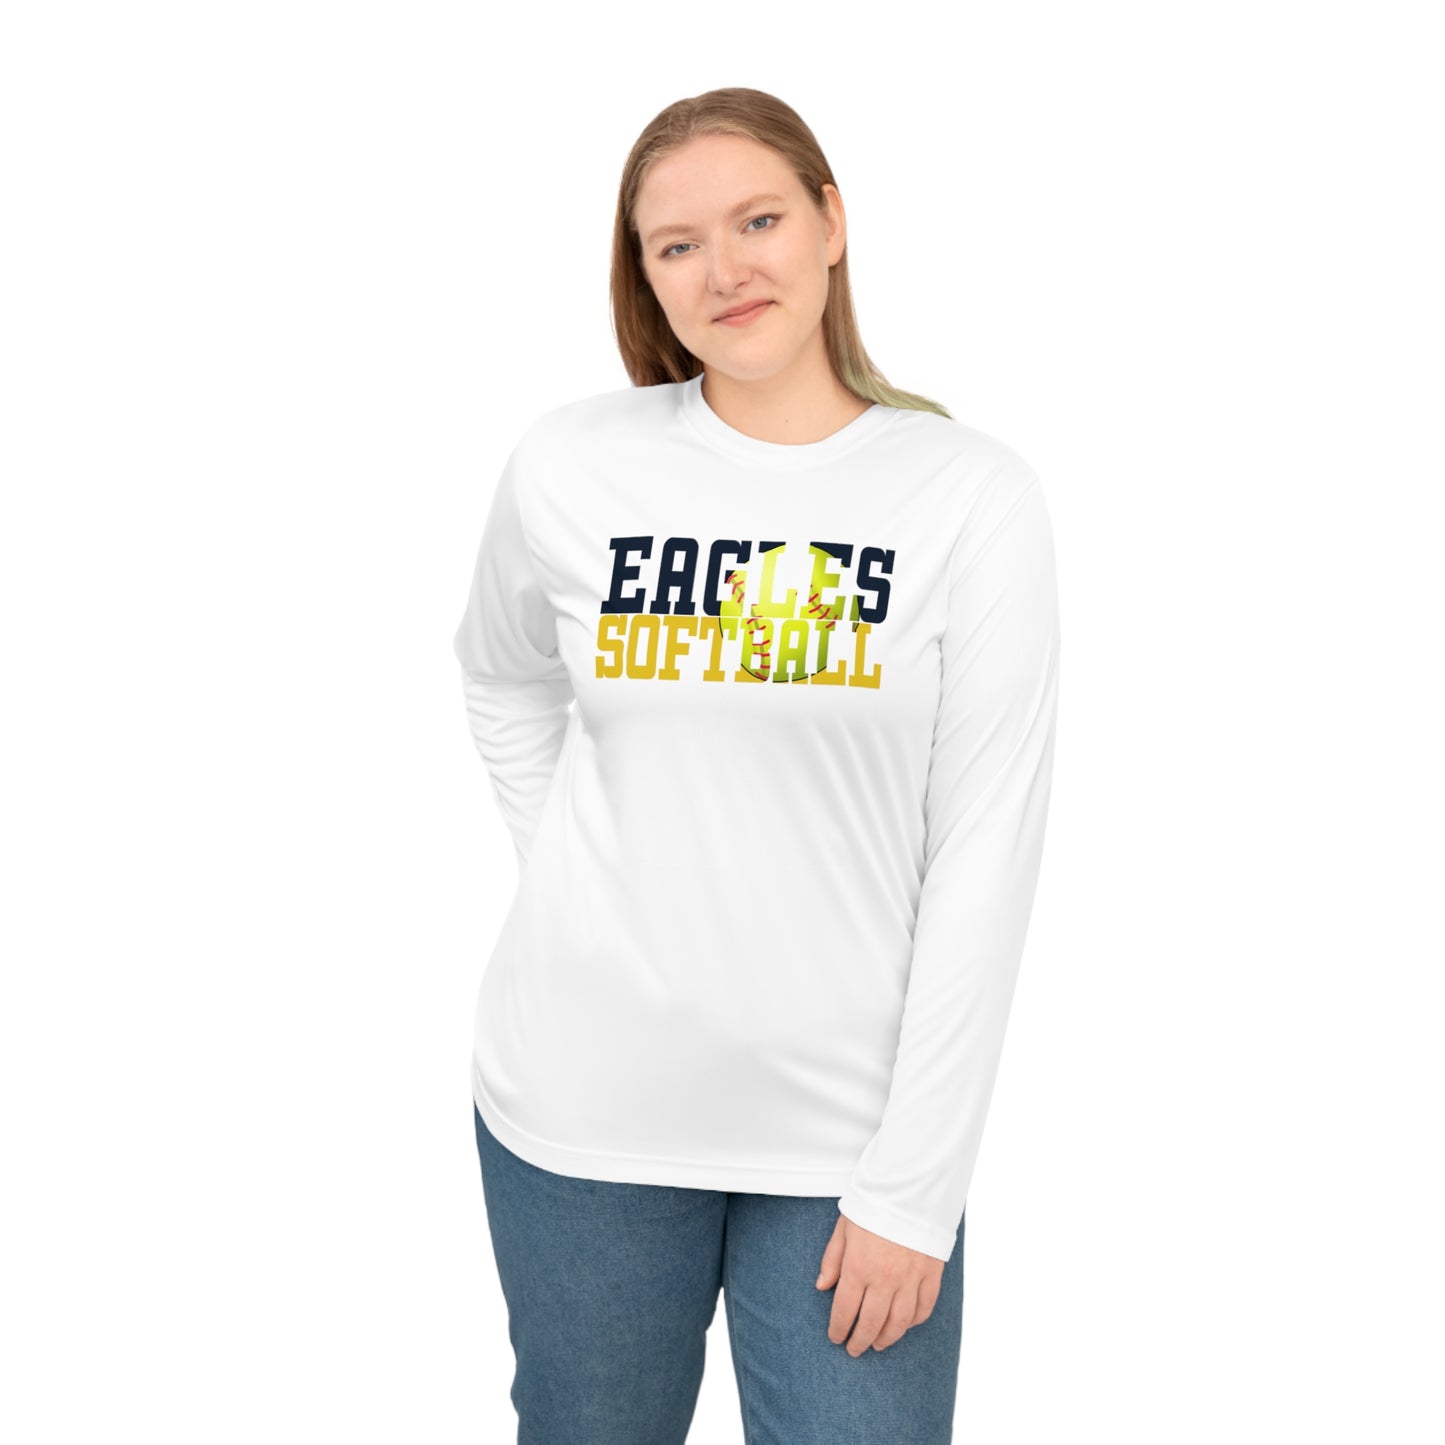 Softball Cutout - Team 365 Unisex Performance Long Sleeve Shirt